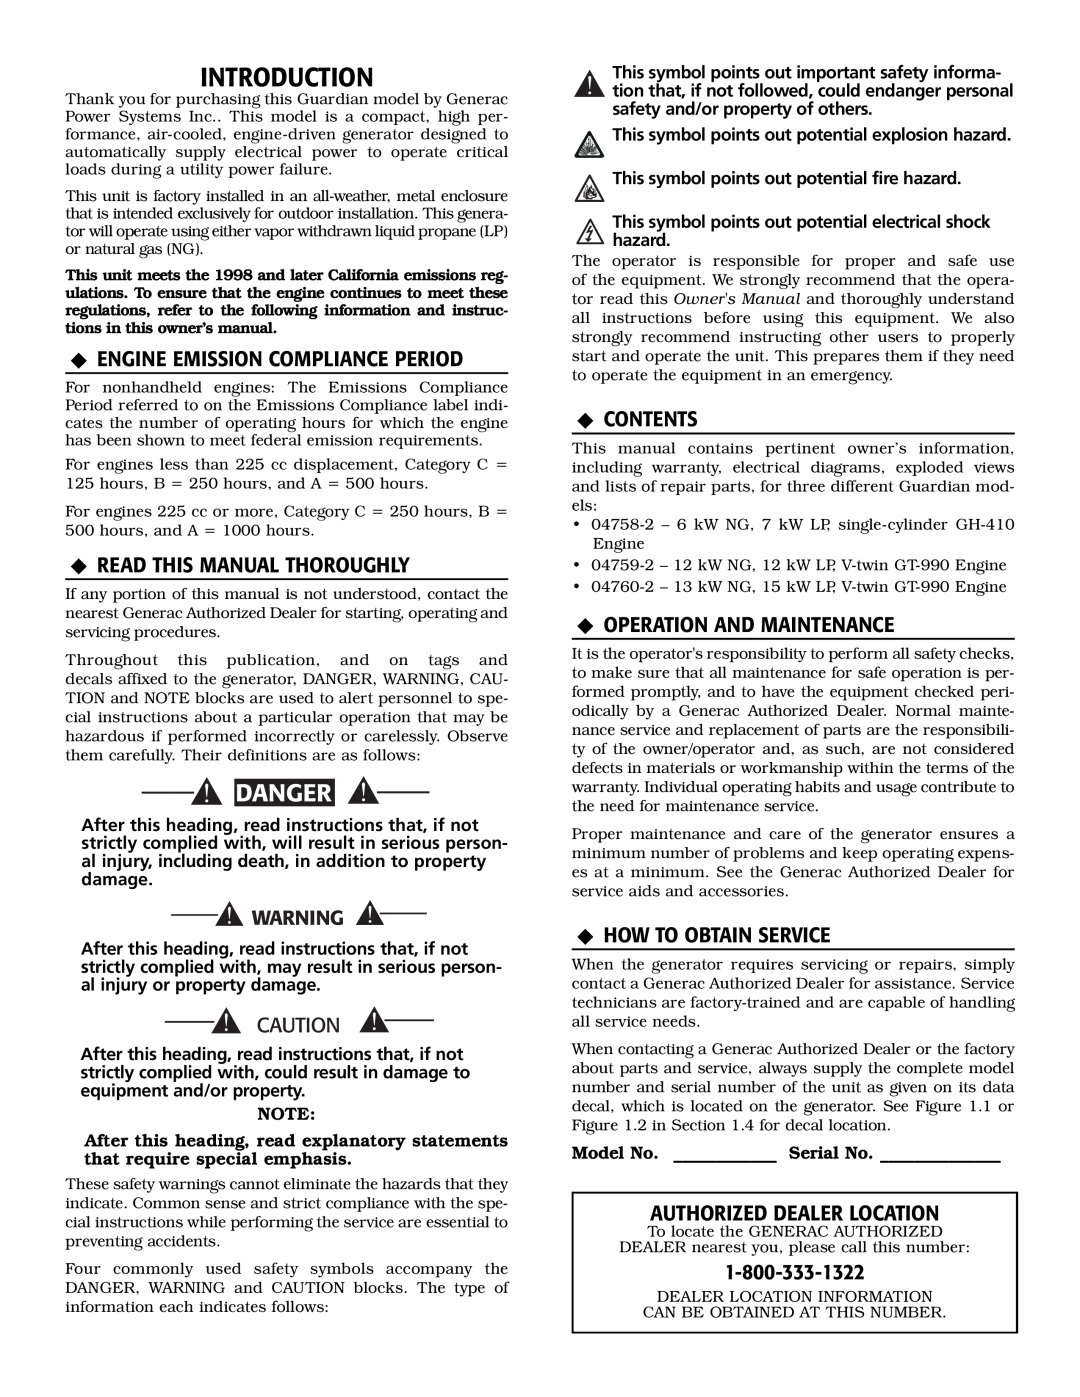 Guardian Technologies 04758-2, 04759-2, 04760-2 Introduction, Danger, ‹ Engine Emission Compliance Period, ‹ Contents 